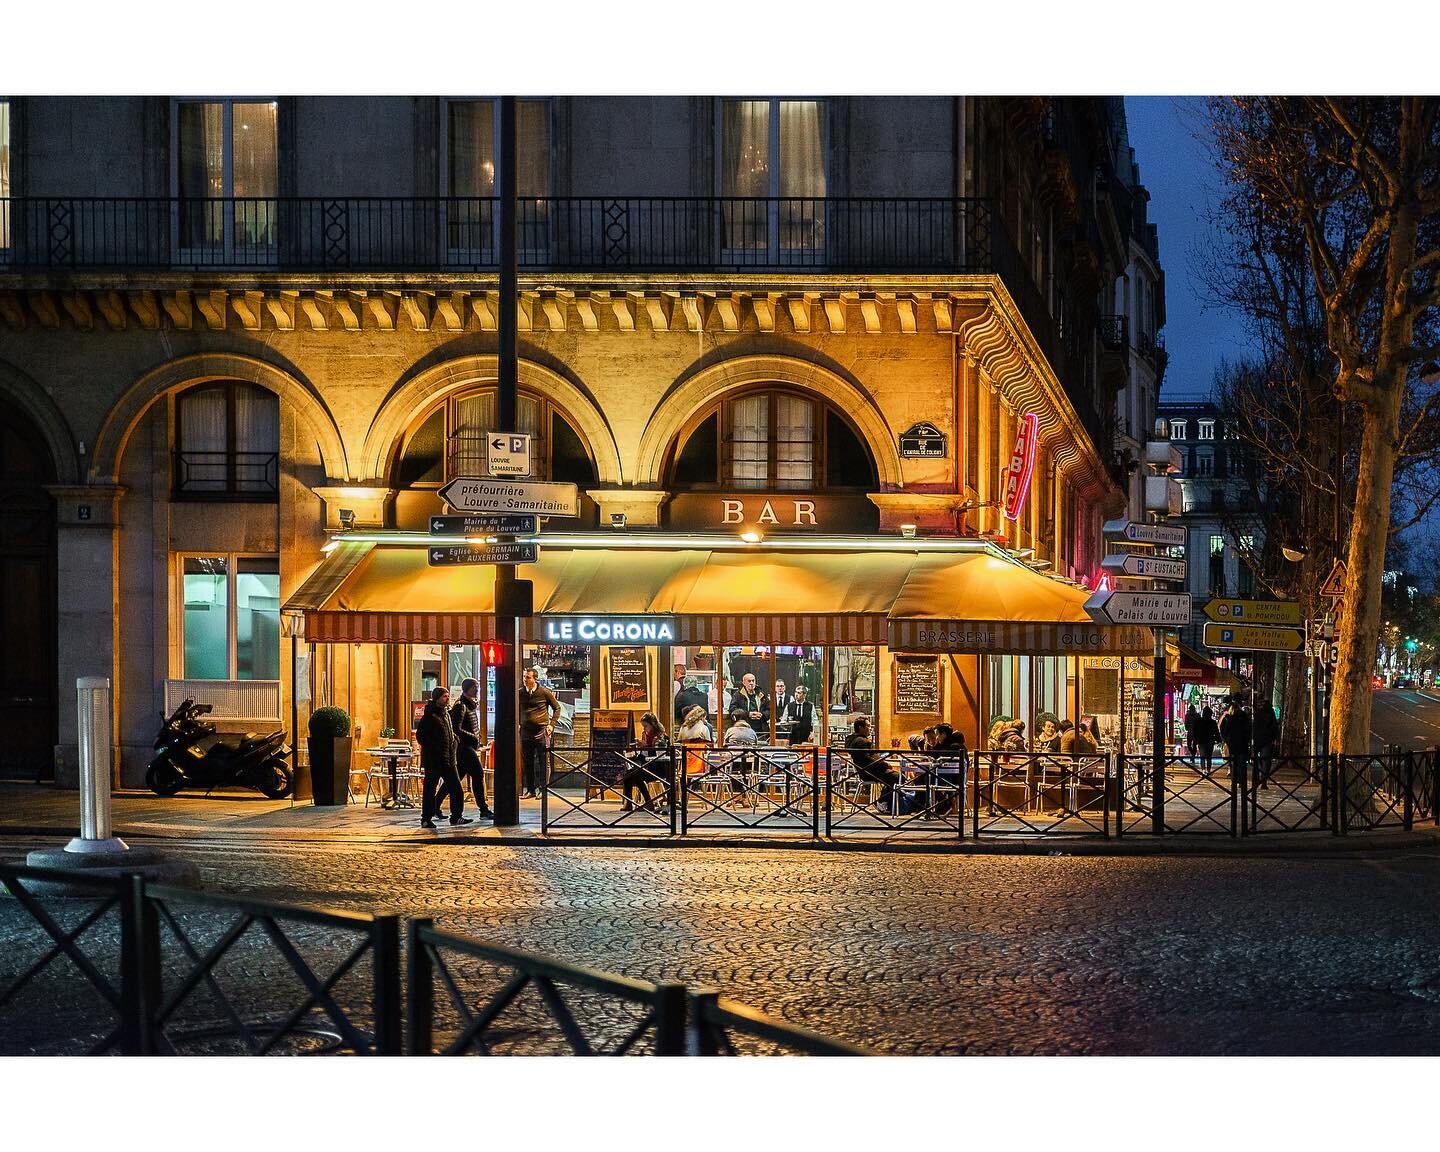 Corner of Le Corona - Paris, France - 2019

Travel 

#nilevinczphotography #nikonnofilter #yourshotphotographer #streetphotography #travelphotography #sweetstreetbeat #life_is_street #peopleinplaces #urbanlandscapes #photocinematica #eyeshotmag #made